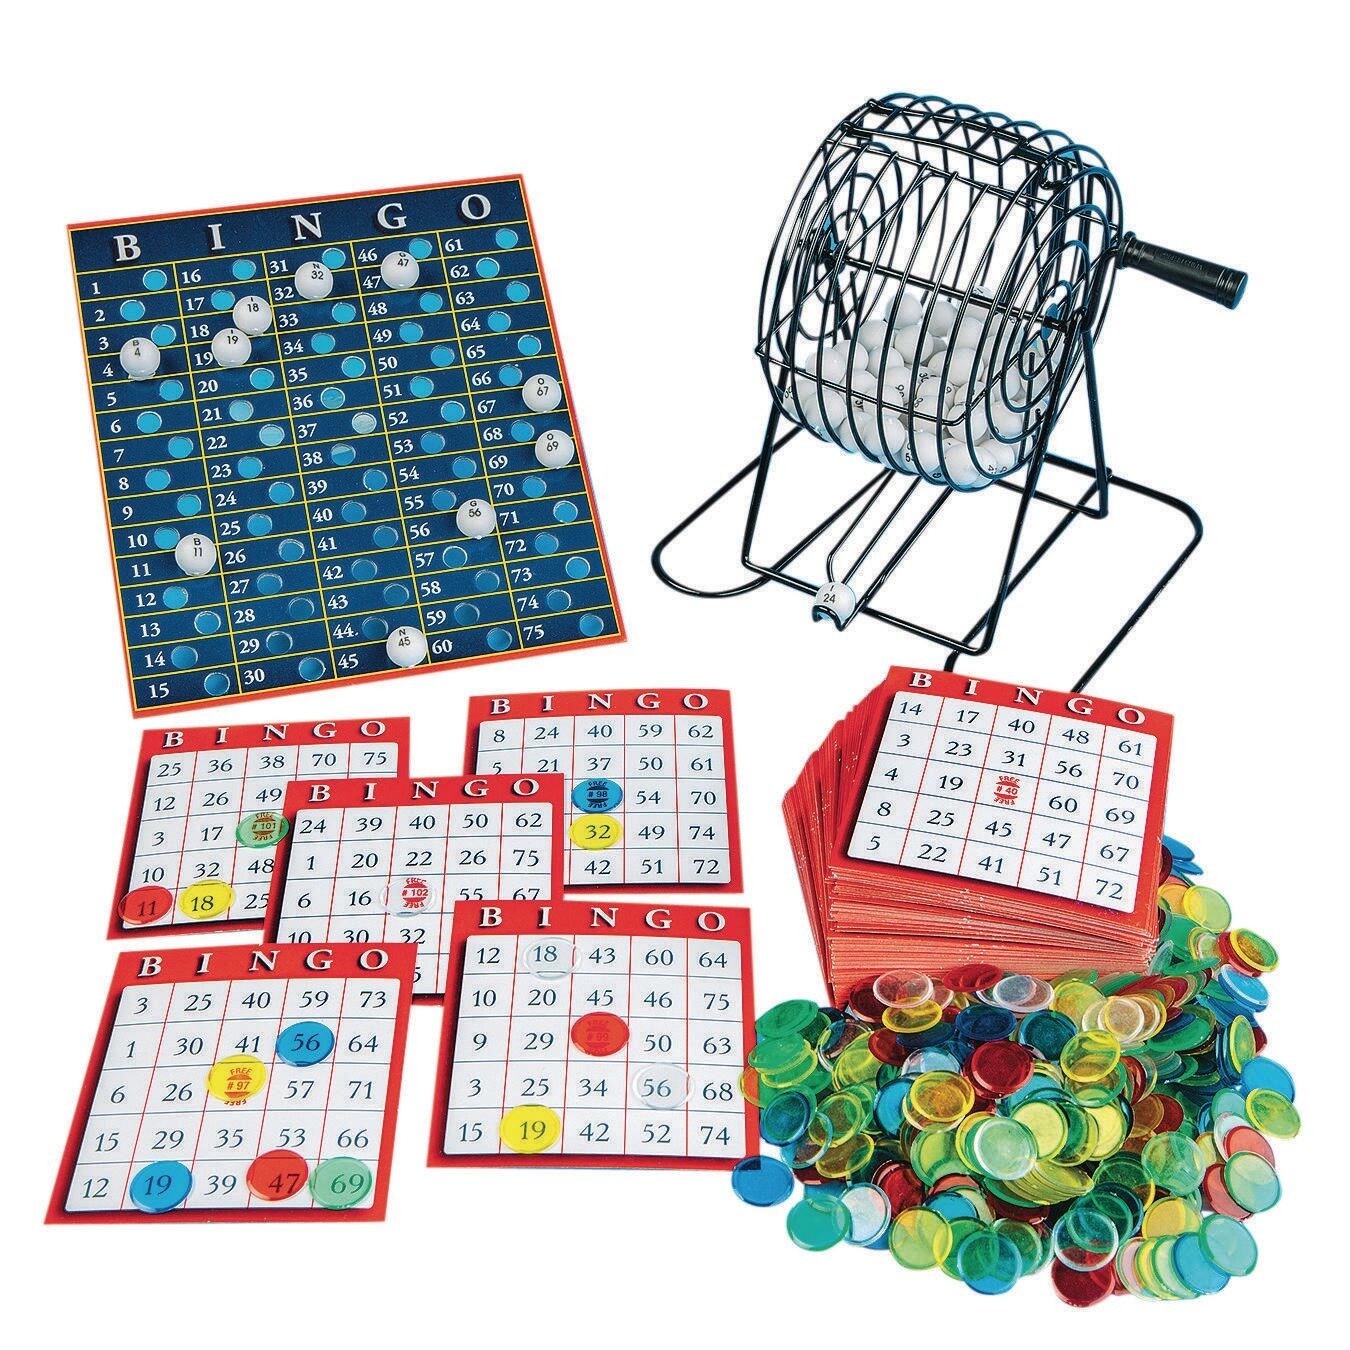 S&S Worldwide Value Bingo Set. Complete Set Includes 8